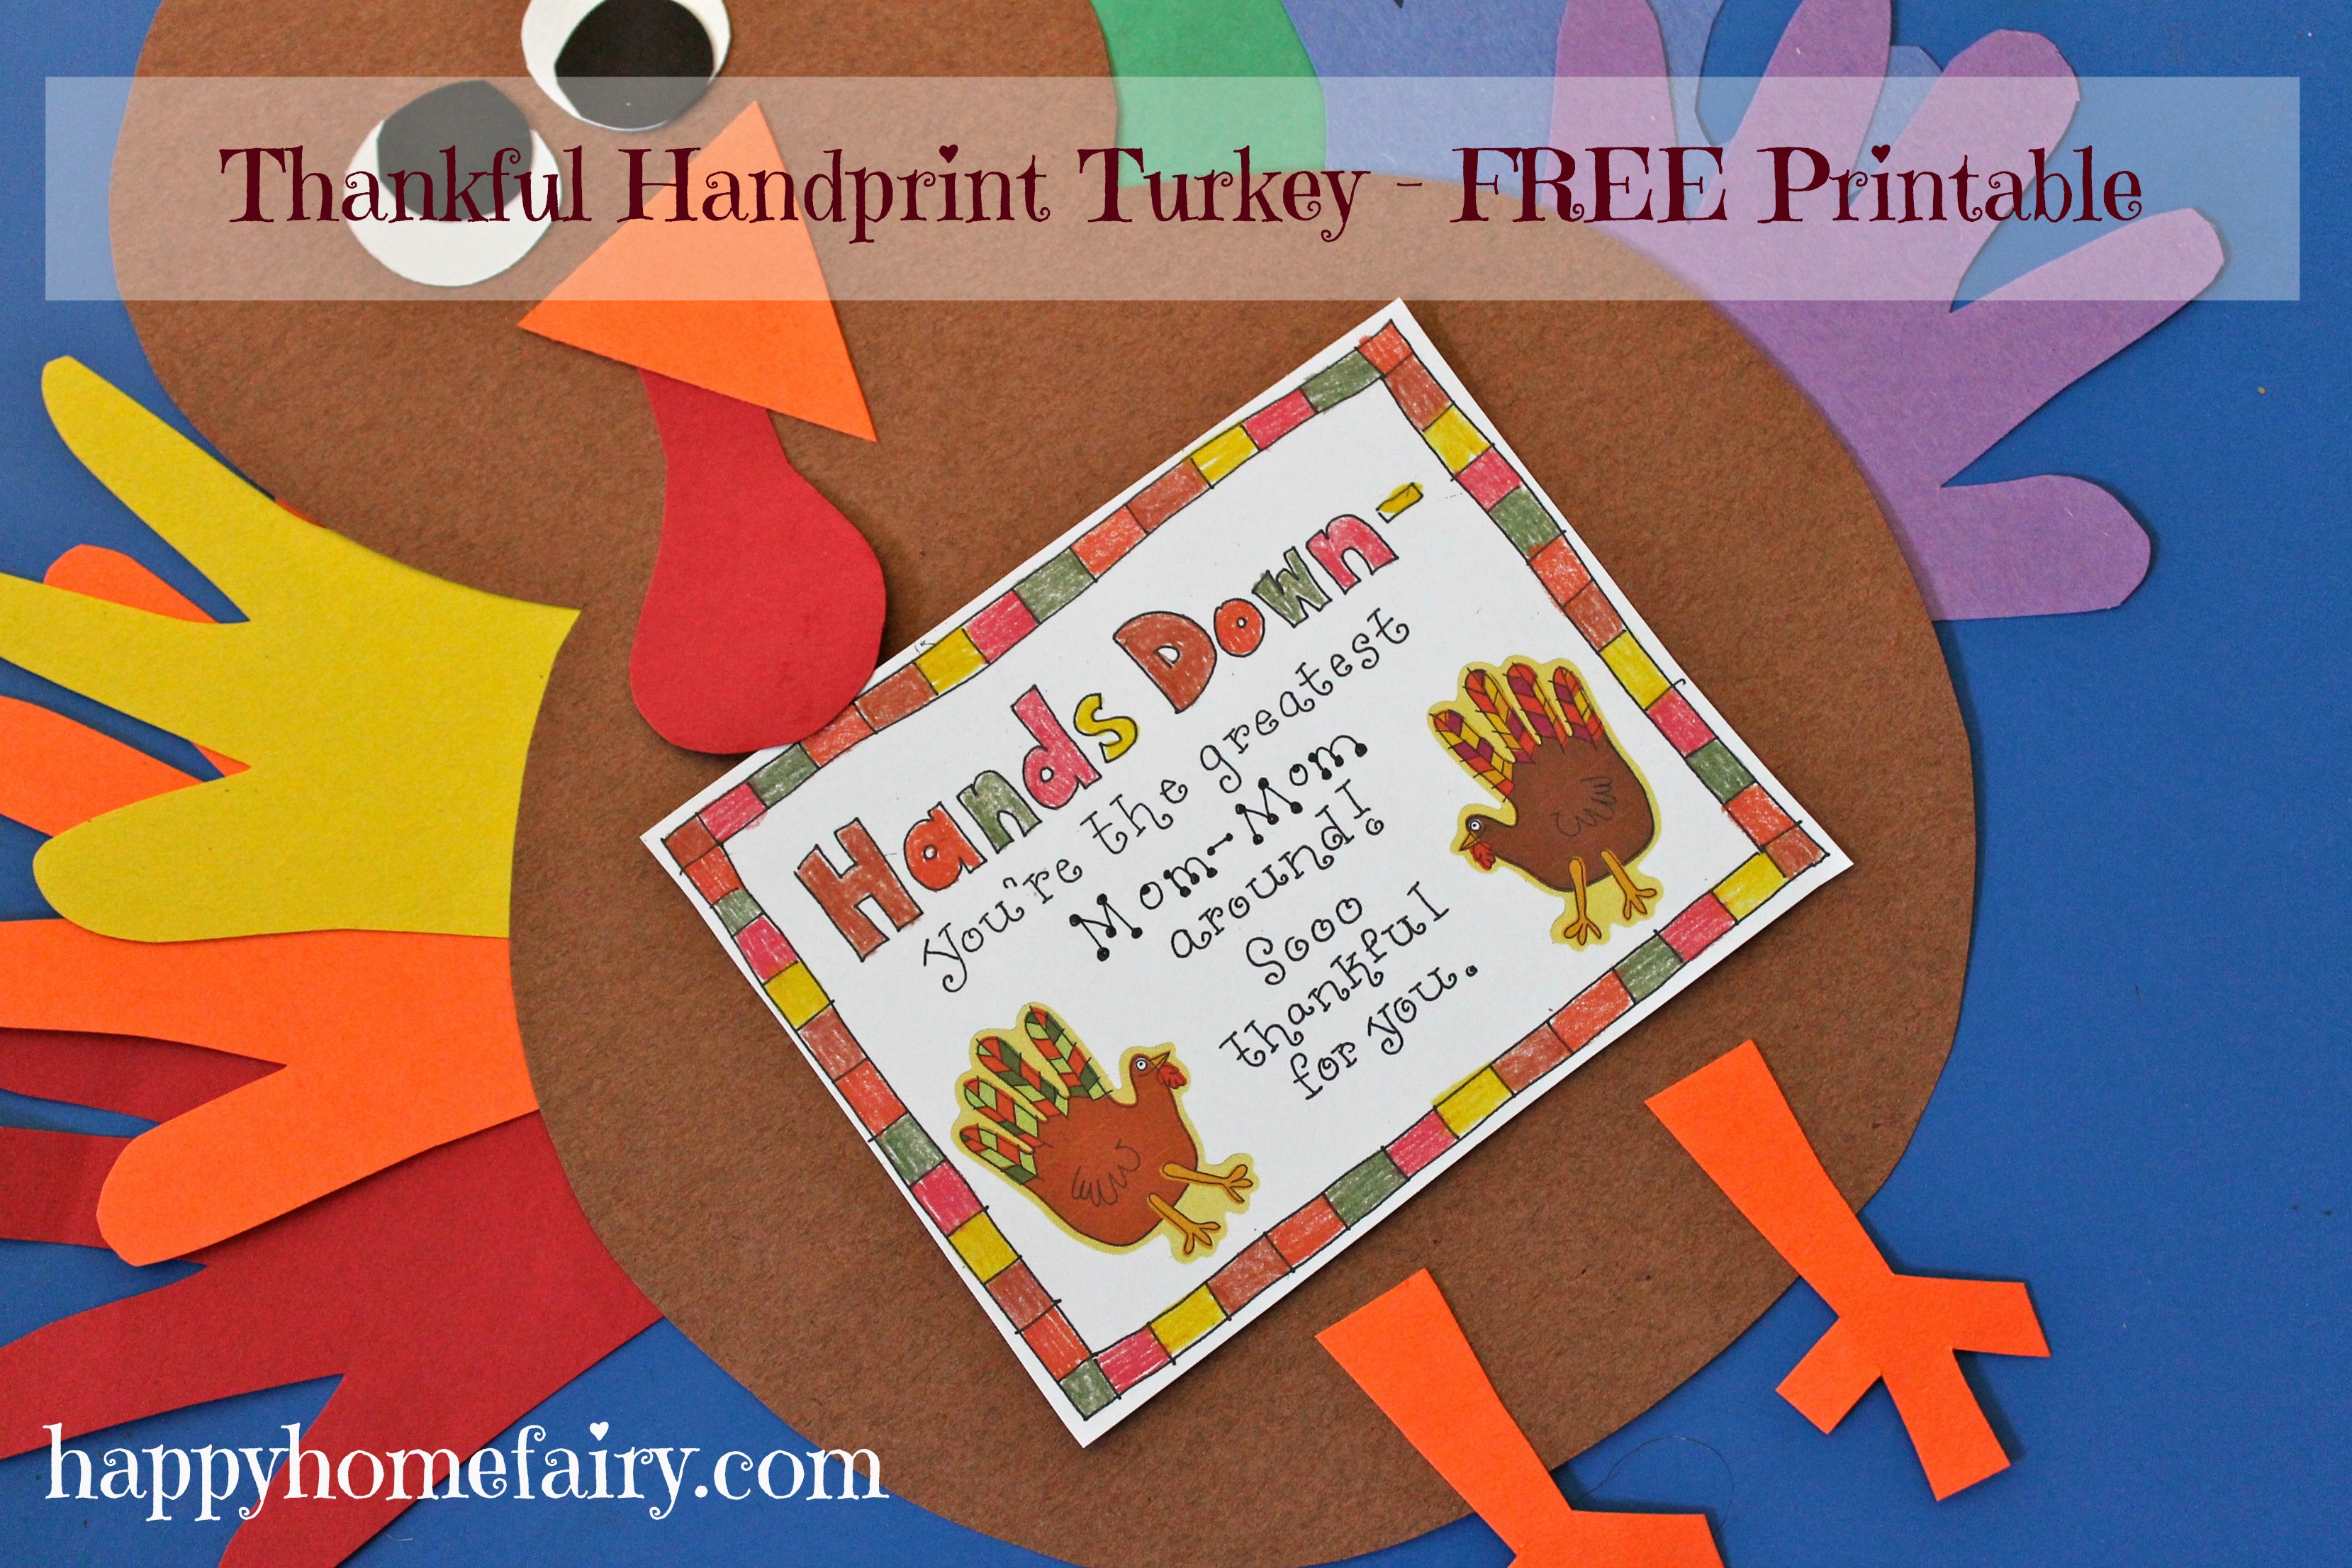 Thankful Handprint Turkey Craft - FREE Printable - Happy Home Fairy